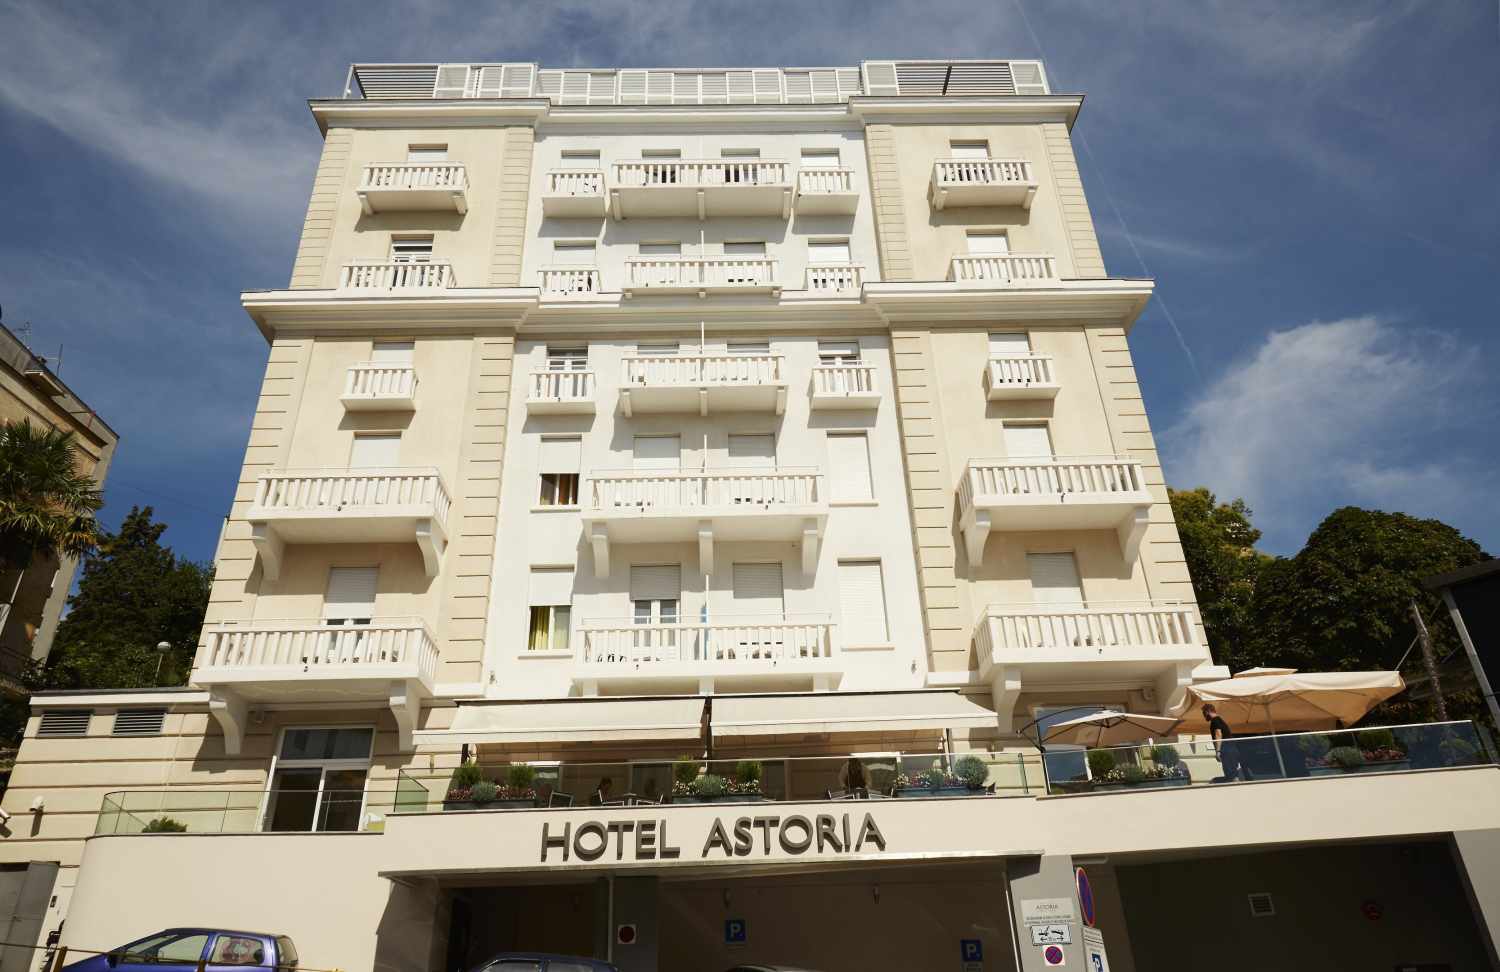 Hotel Astoria, Opatija, Istrië, Kroatië